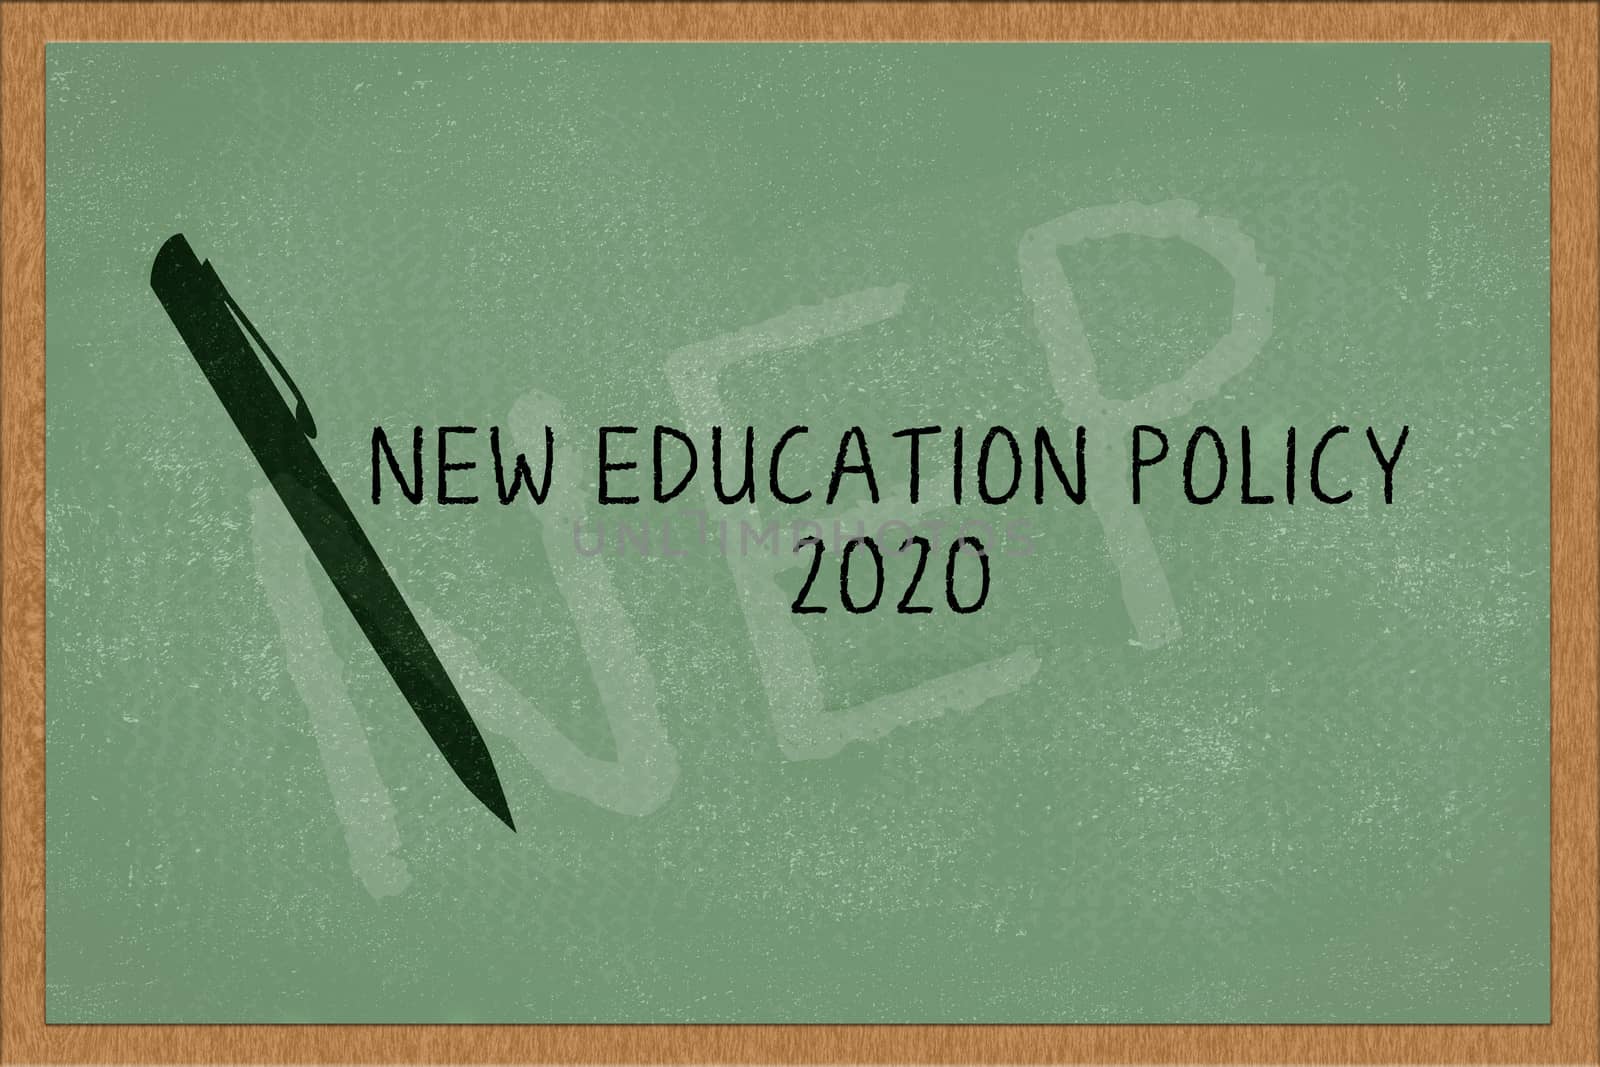 New education Policy 2020 on green chalk board with pen by lakshmiprasad.maski@gmai.com